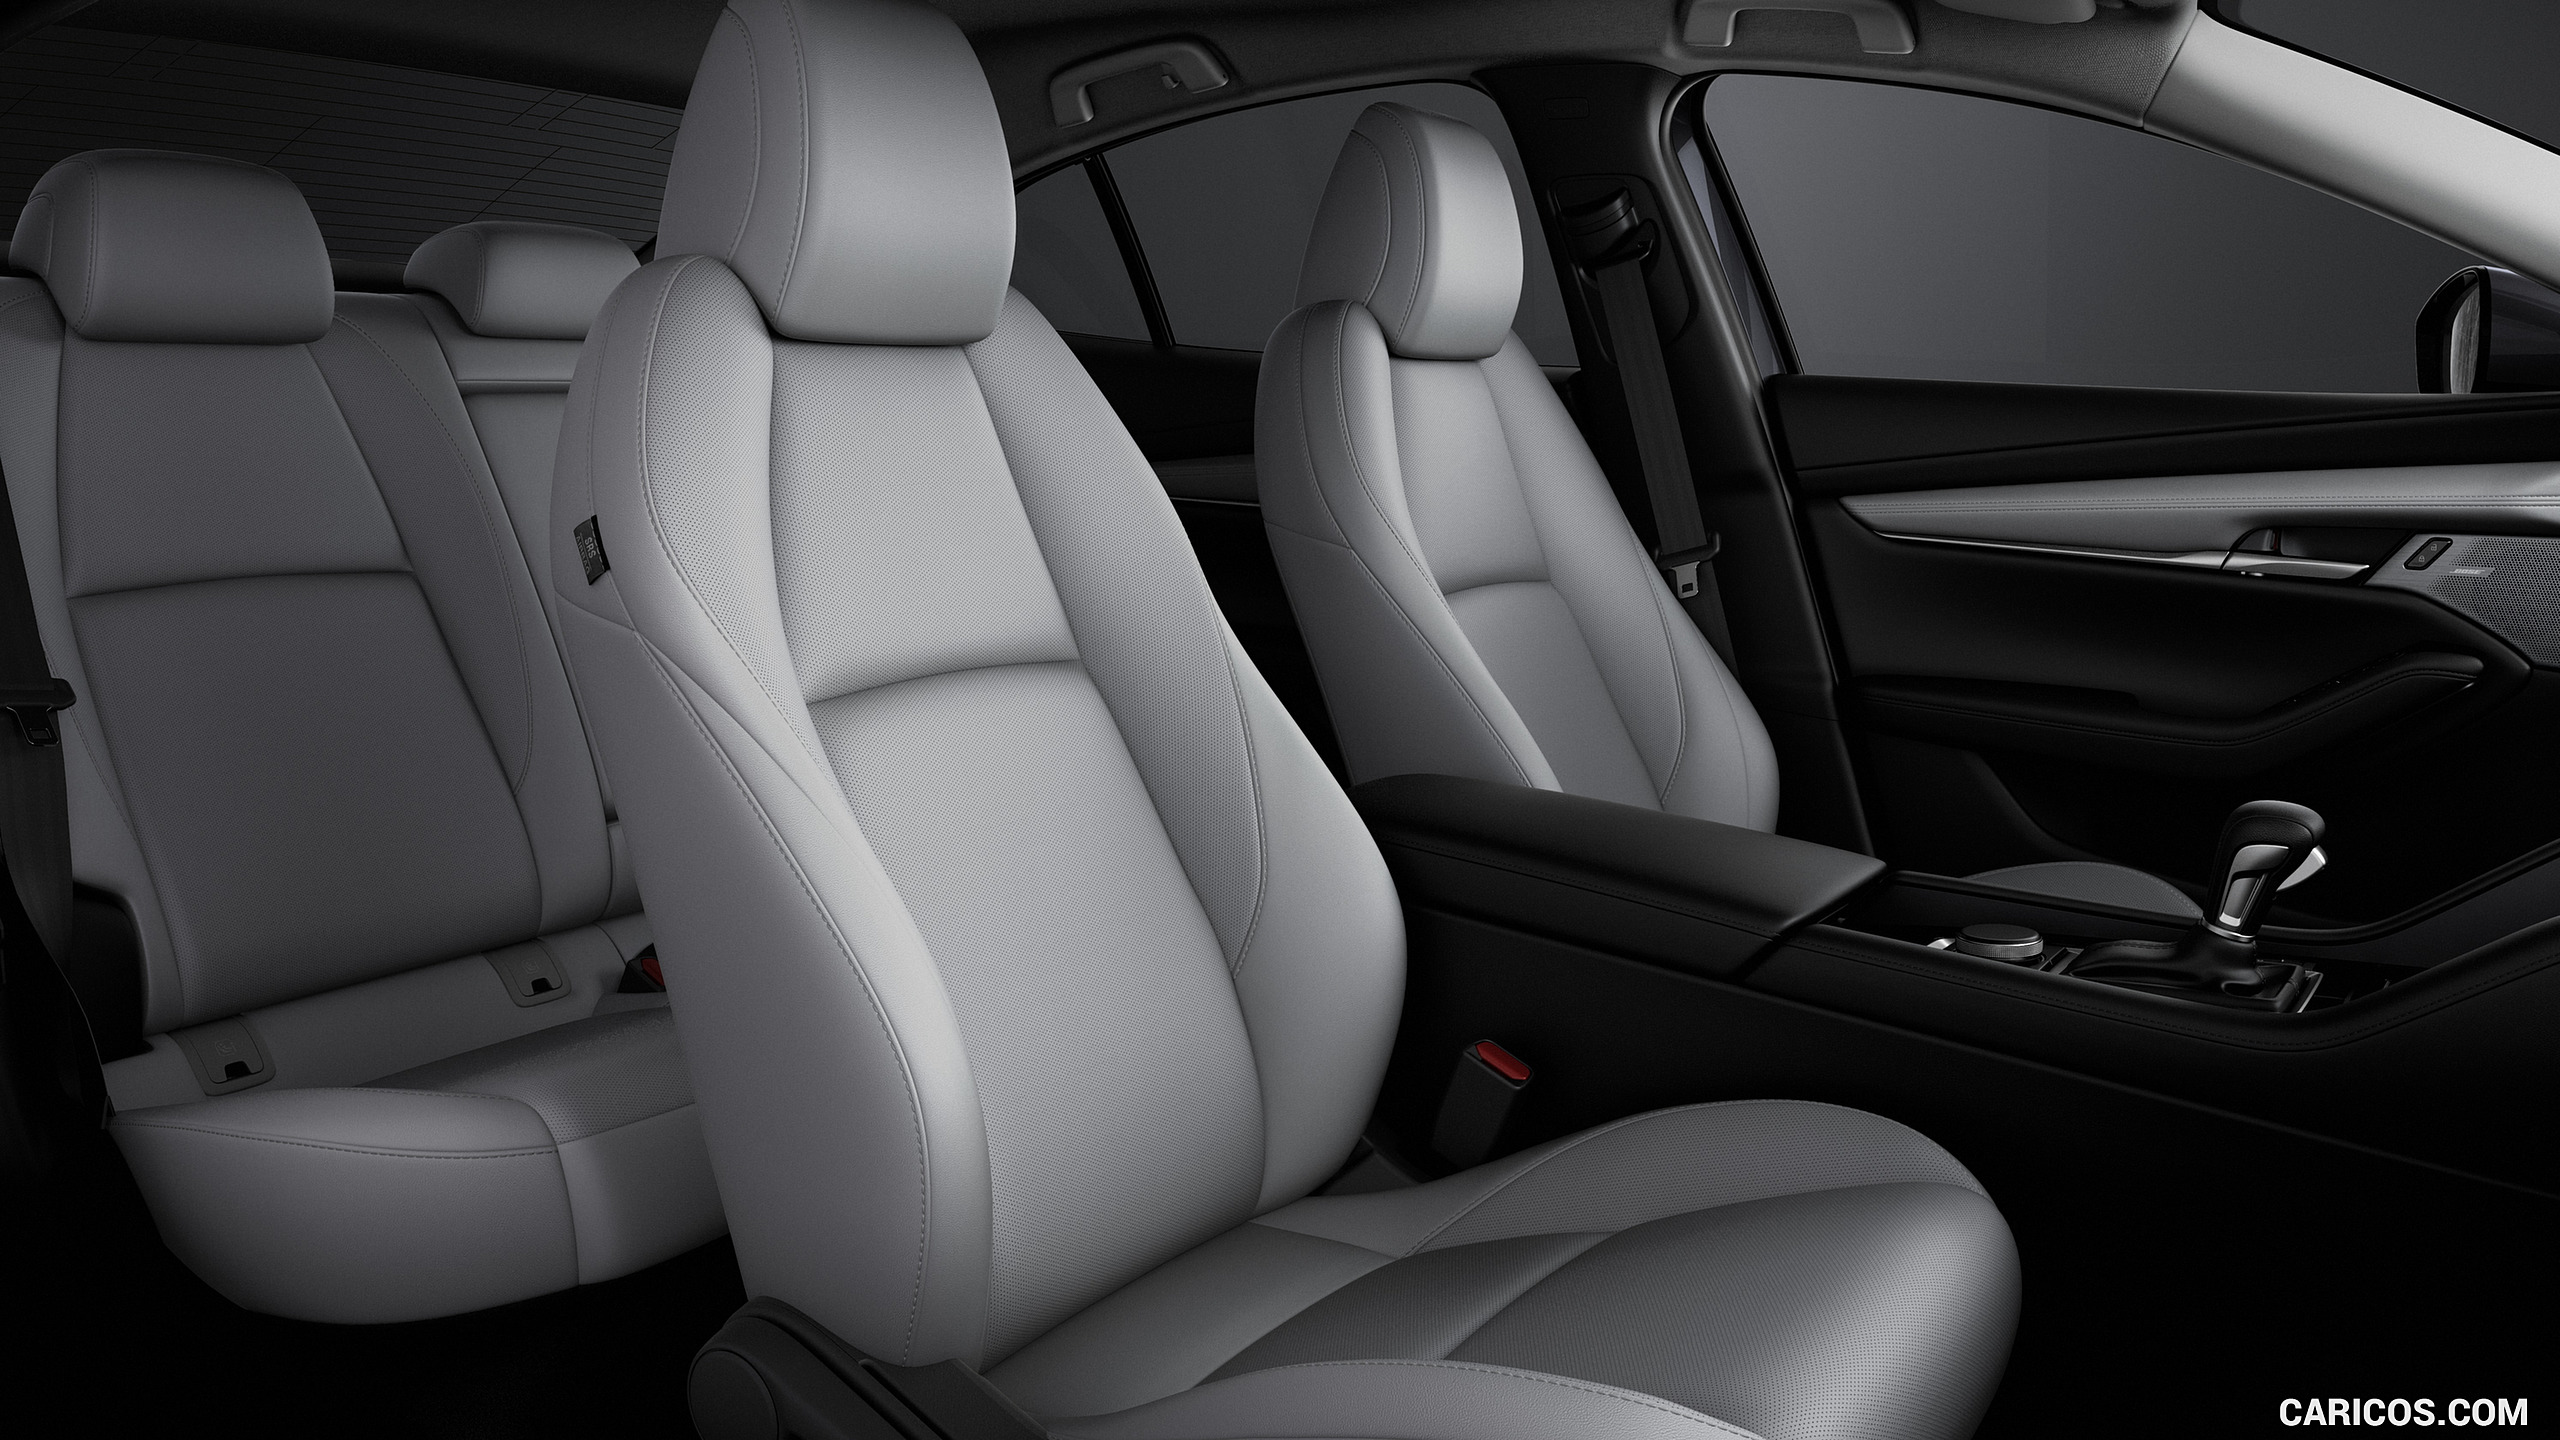 2019 Mazda3 - Interior, Seats, #23 of 44